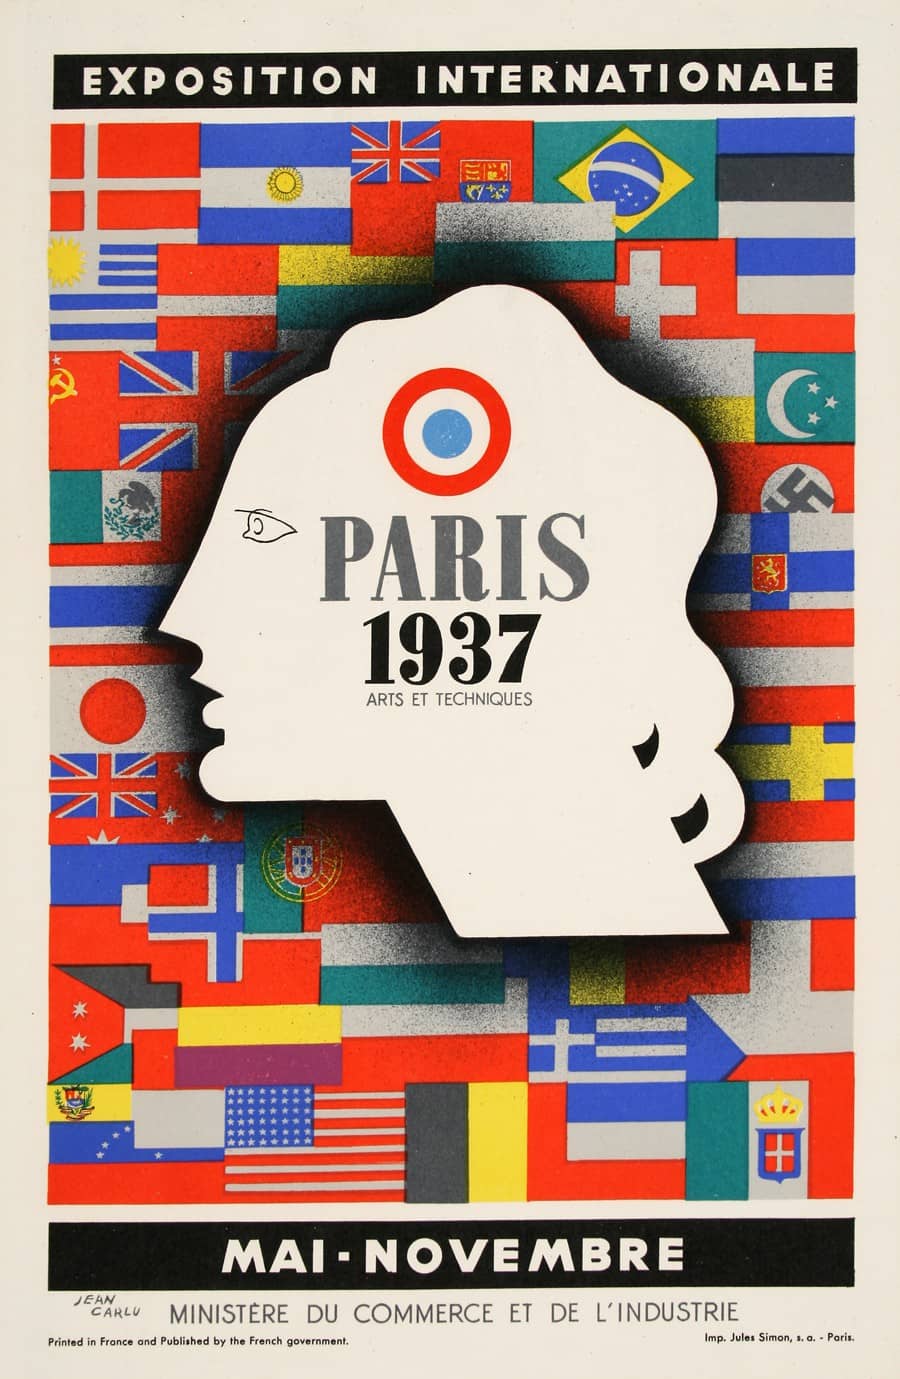 Paris 1937 Exposition Original Poster by Jean Carlu